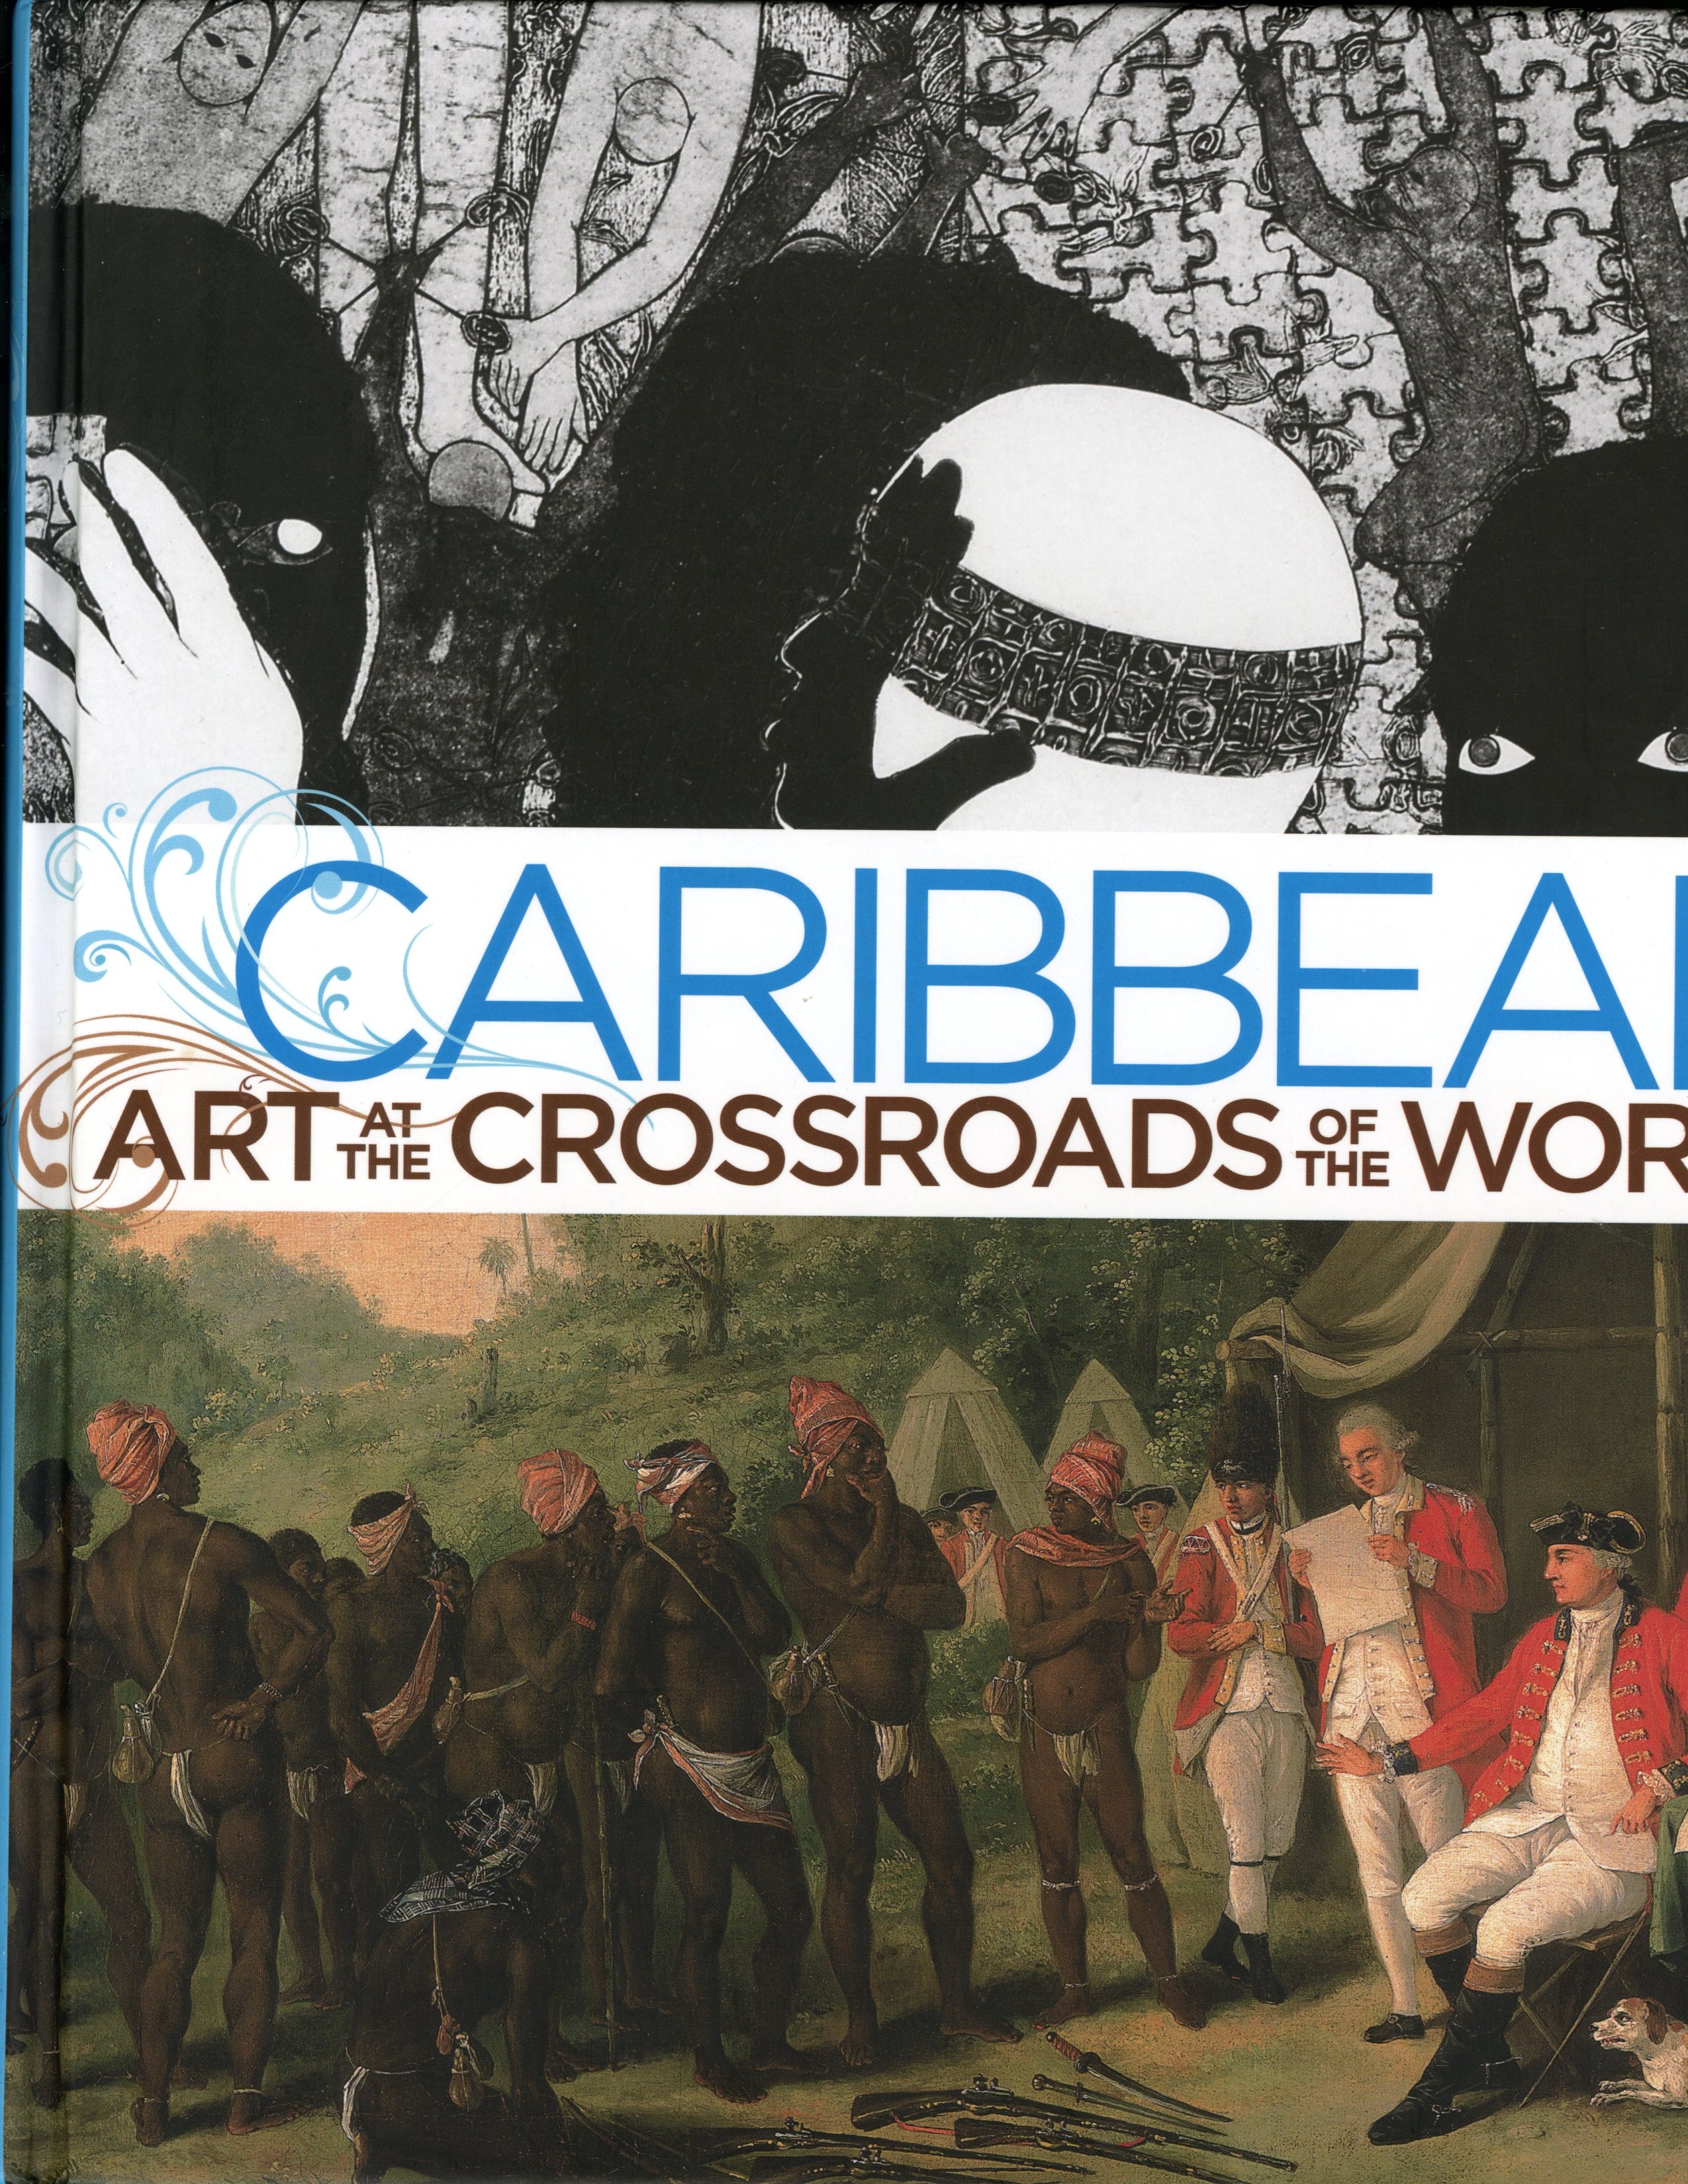 Caribbean Crossroads